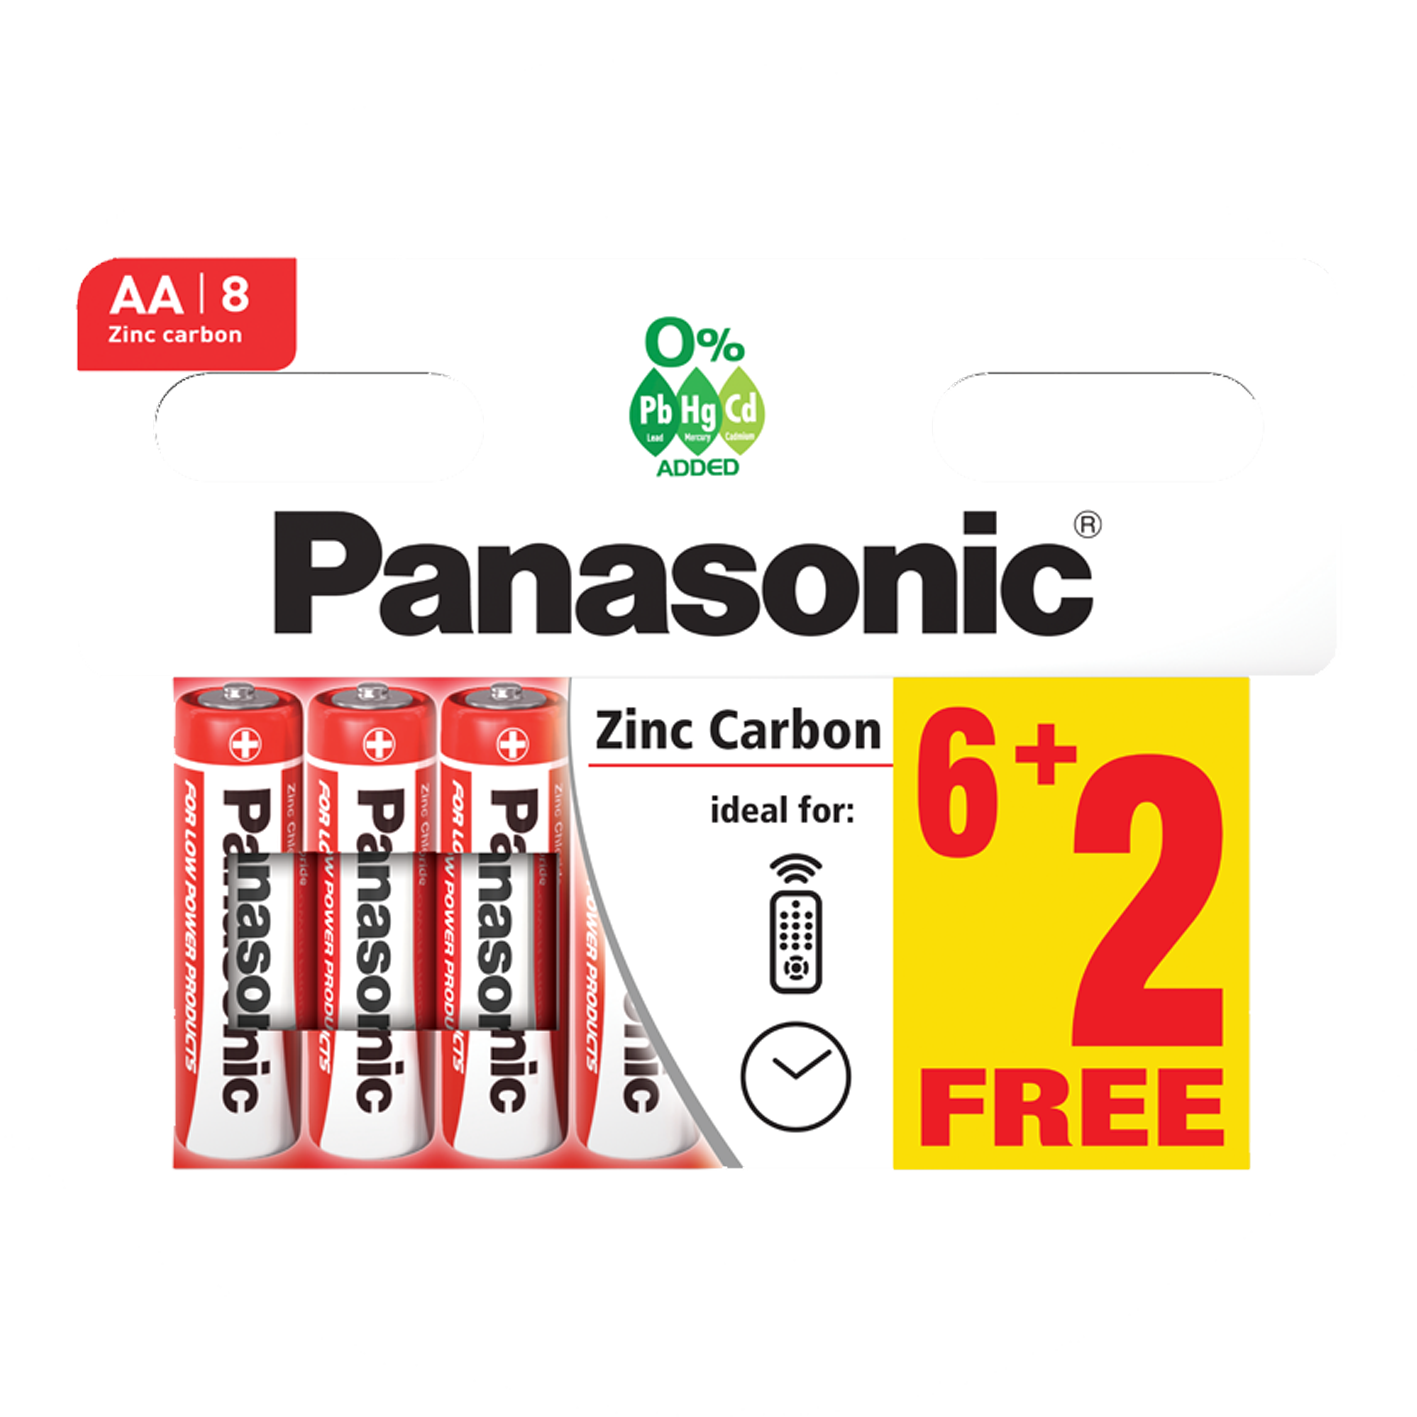 Panasonic AA Zinc Carbon, Pack of 6+2